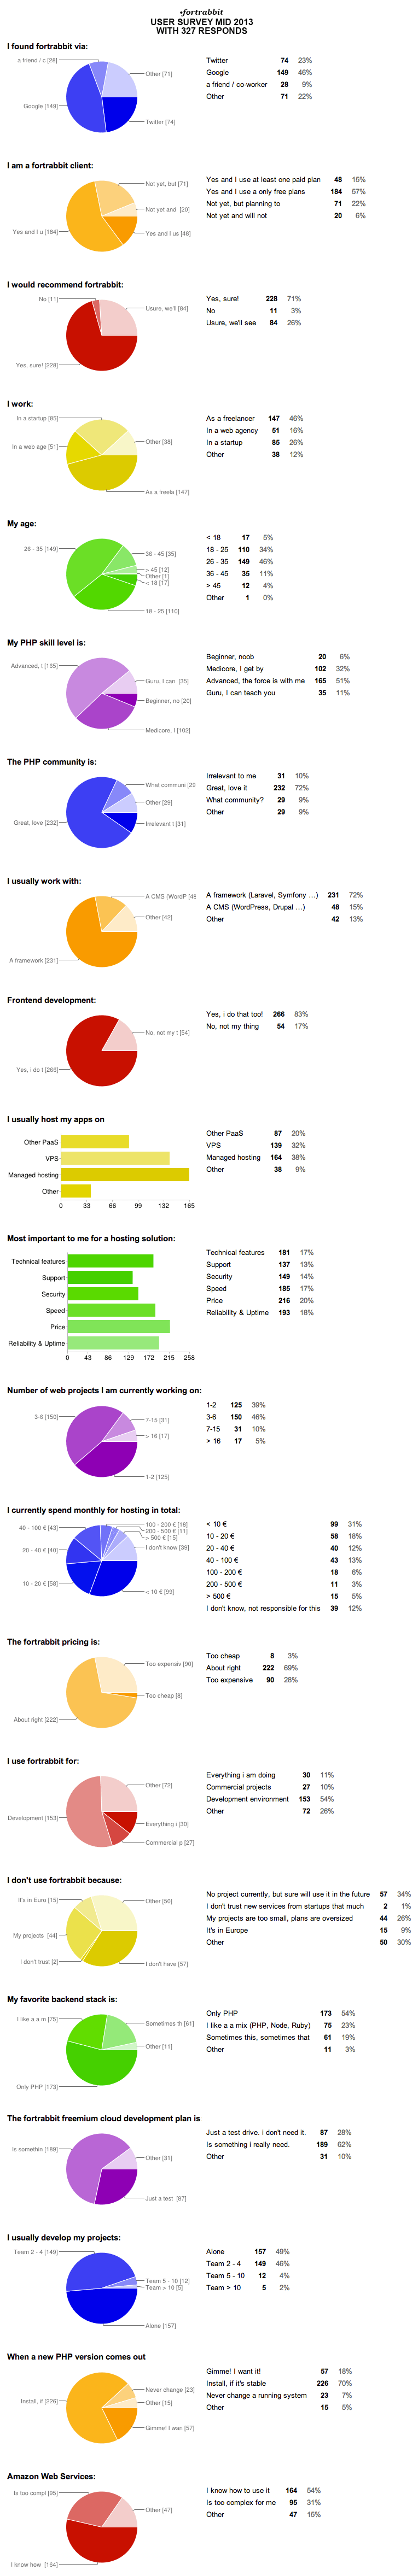 fortrabbit-survey-results